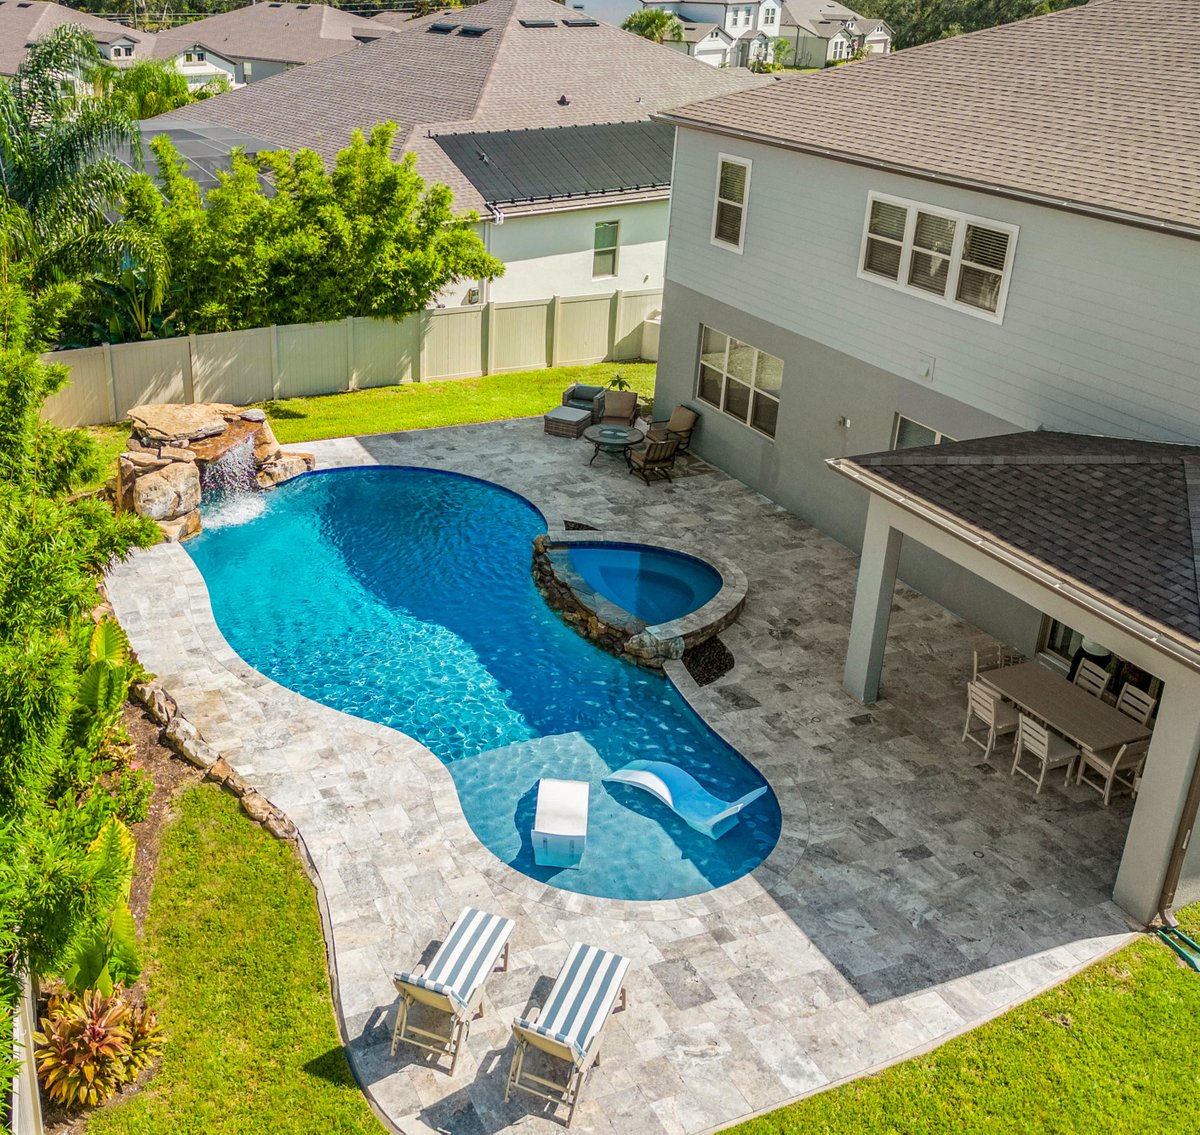 We design and build backyards that make every day feel like a vacation day. #AllCustomPools #orlando #outdoorspaces #backyardgoals #pooldesign #poolbuilder #poolside #poolparty #orlandoflorida #backyard #luxuryhomes